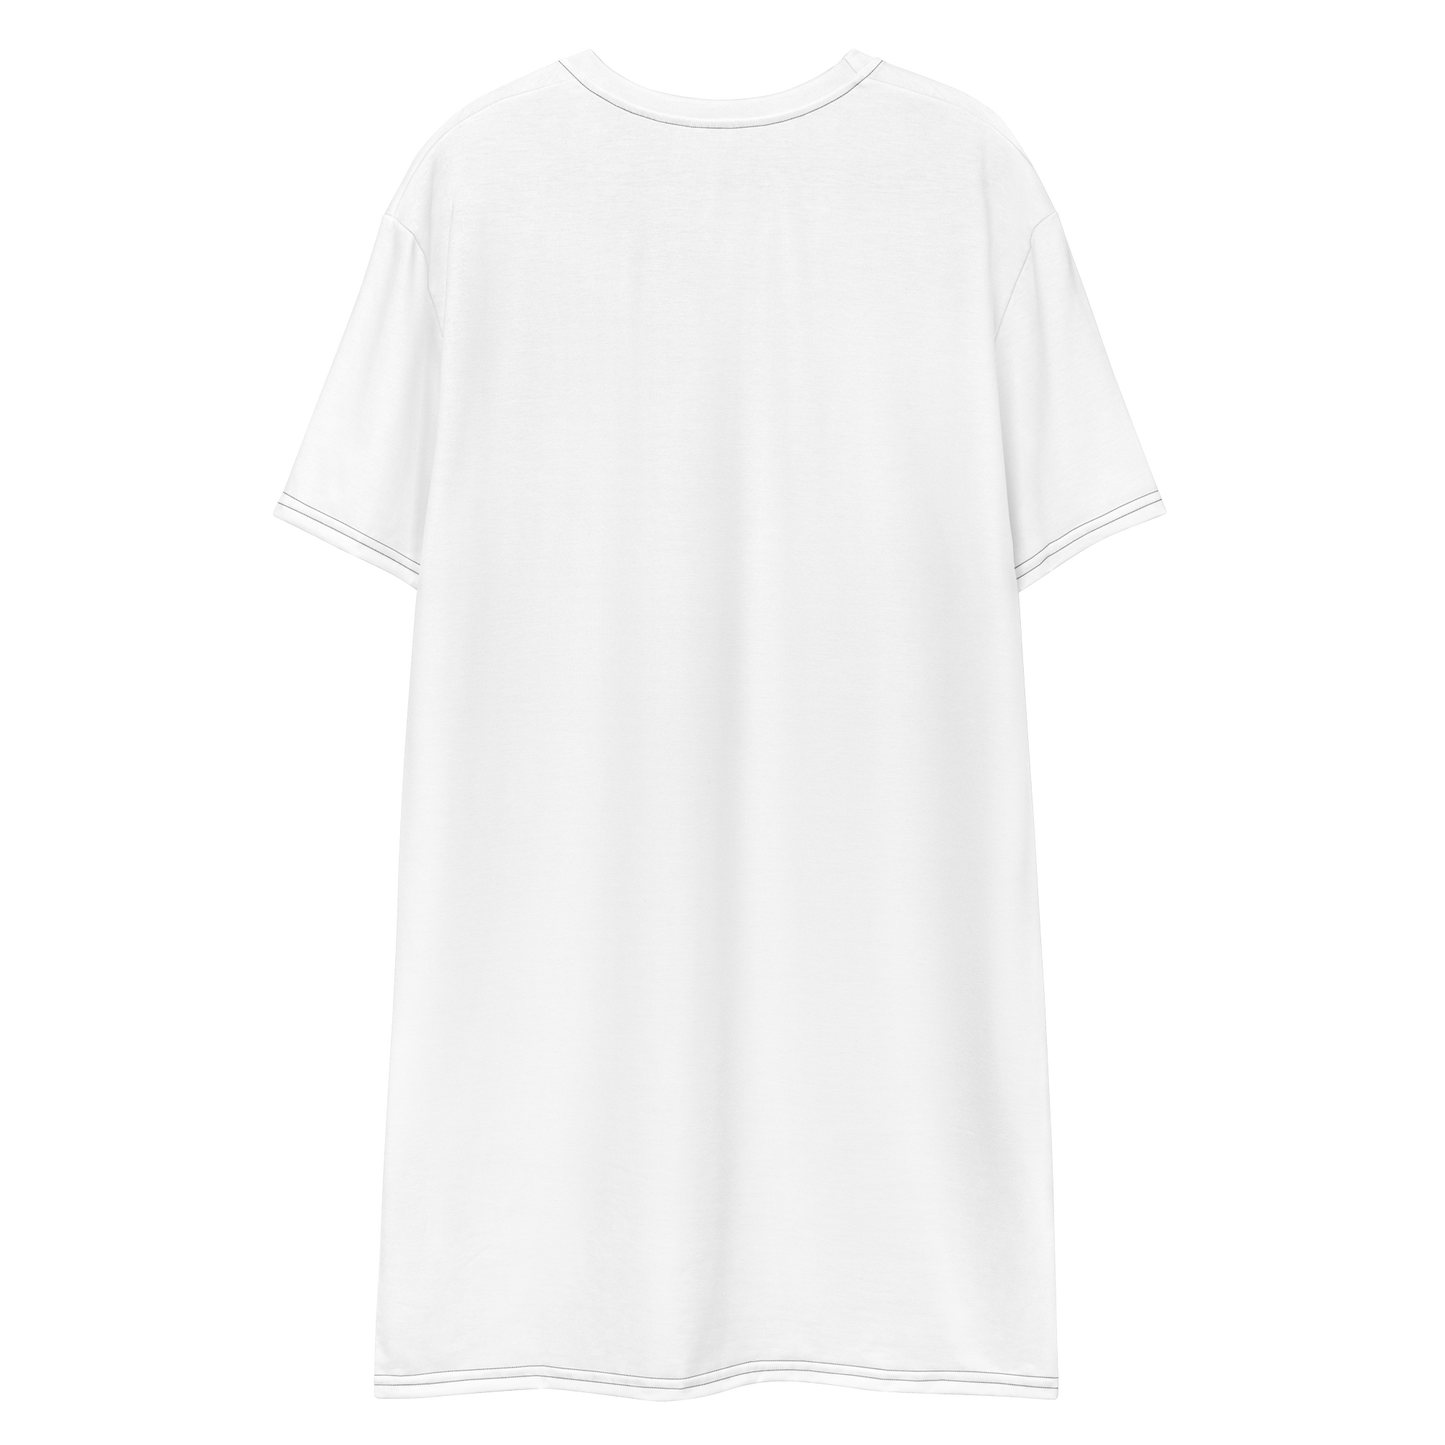 XPLORER T-Shirt Dress